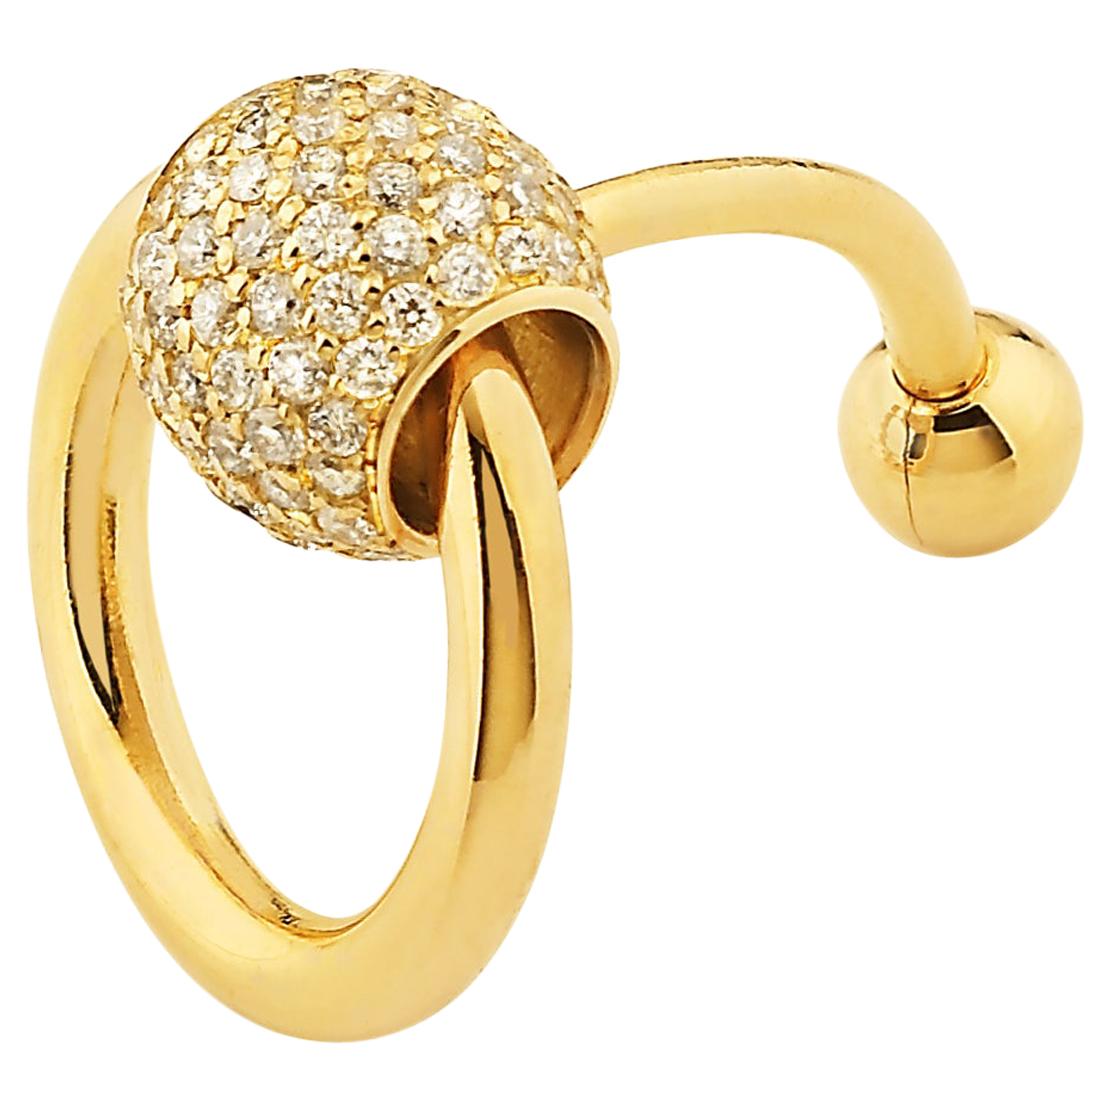 Pierce "O-Ring Navel Piercing" de Betony Vernon Or 18K Pavée Diamant